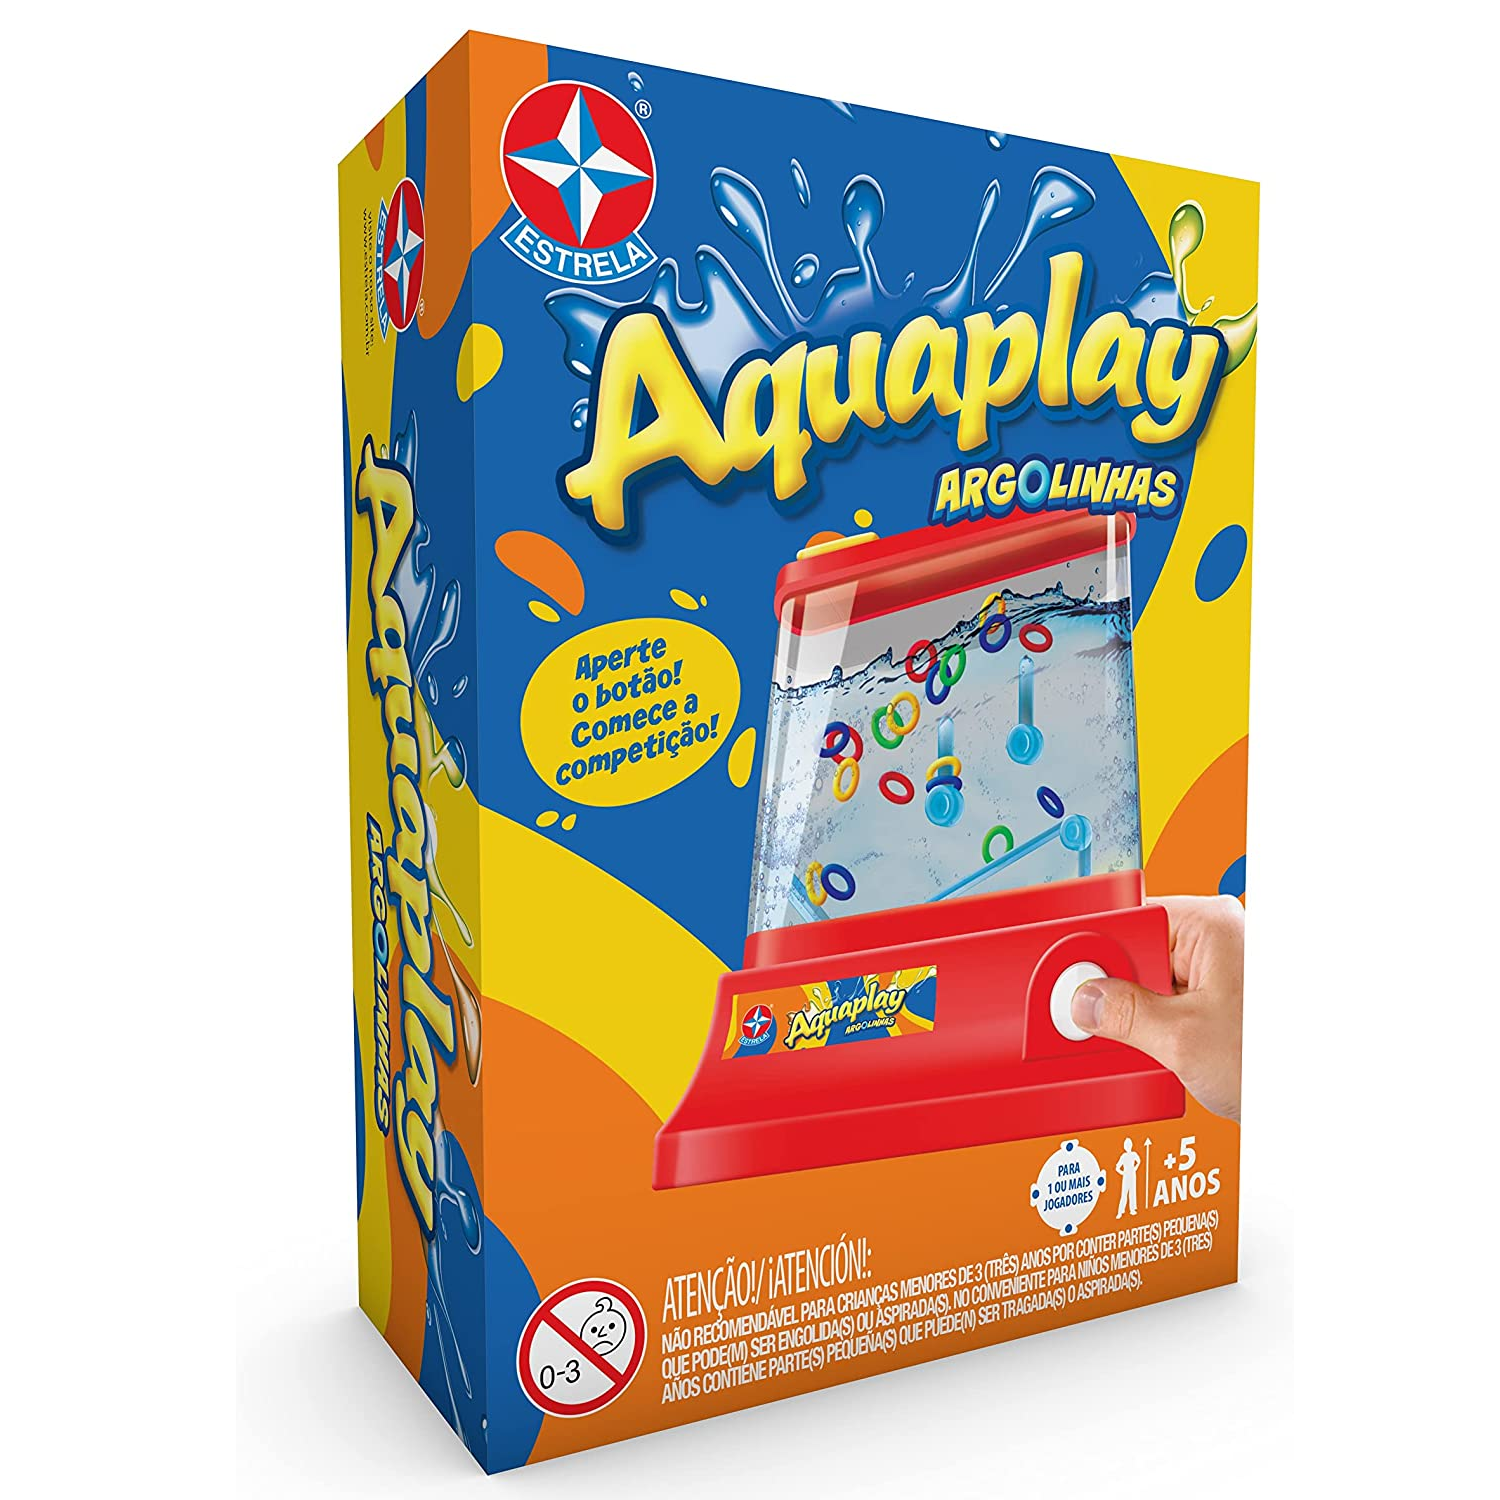 Jogo Bingo Hasbro Gaming - Fátima Criança